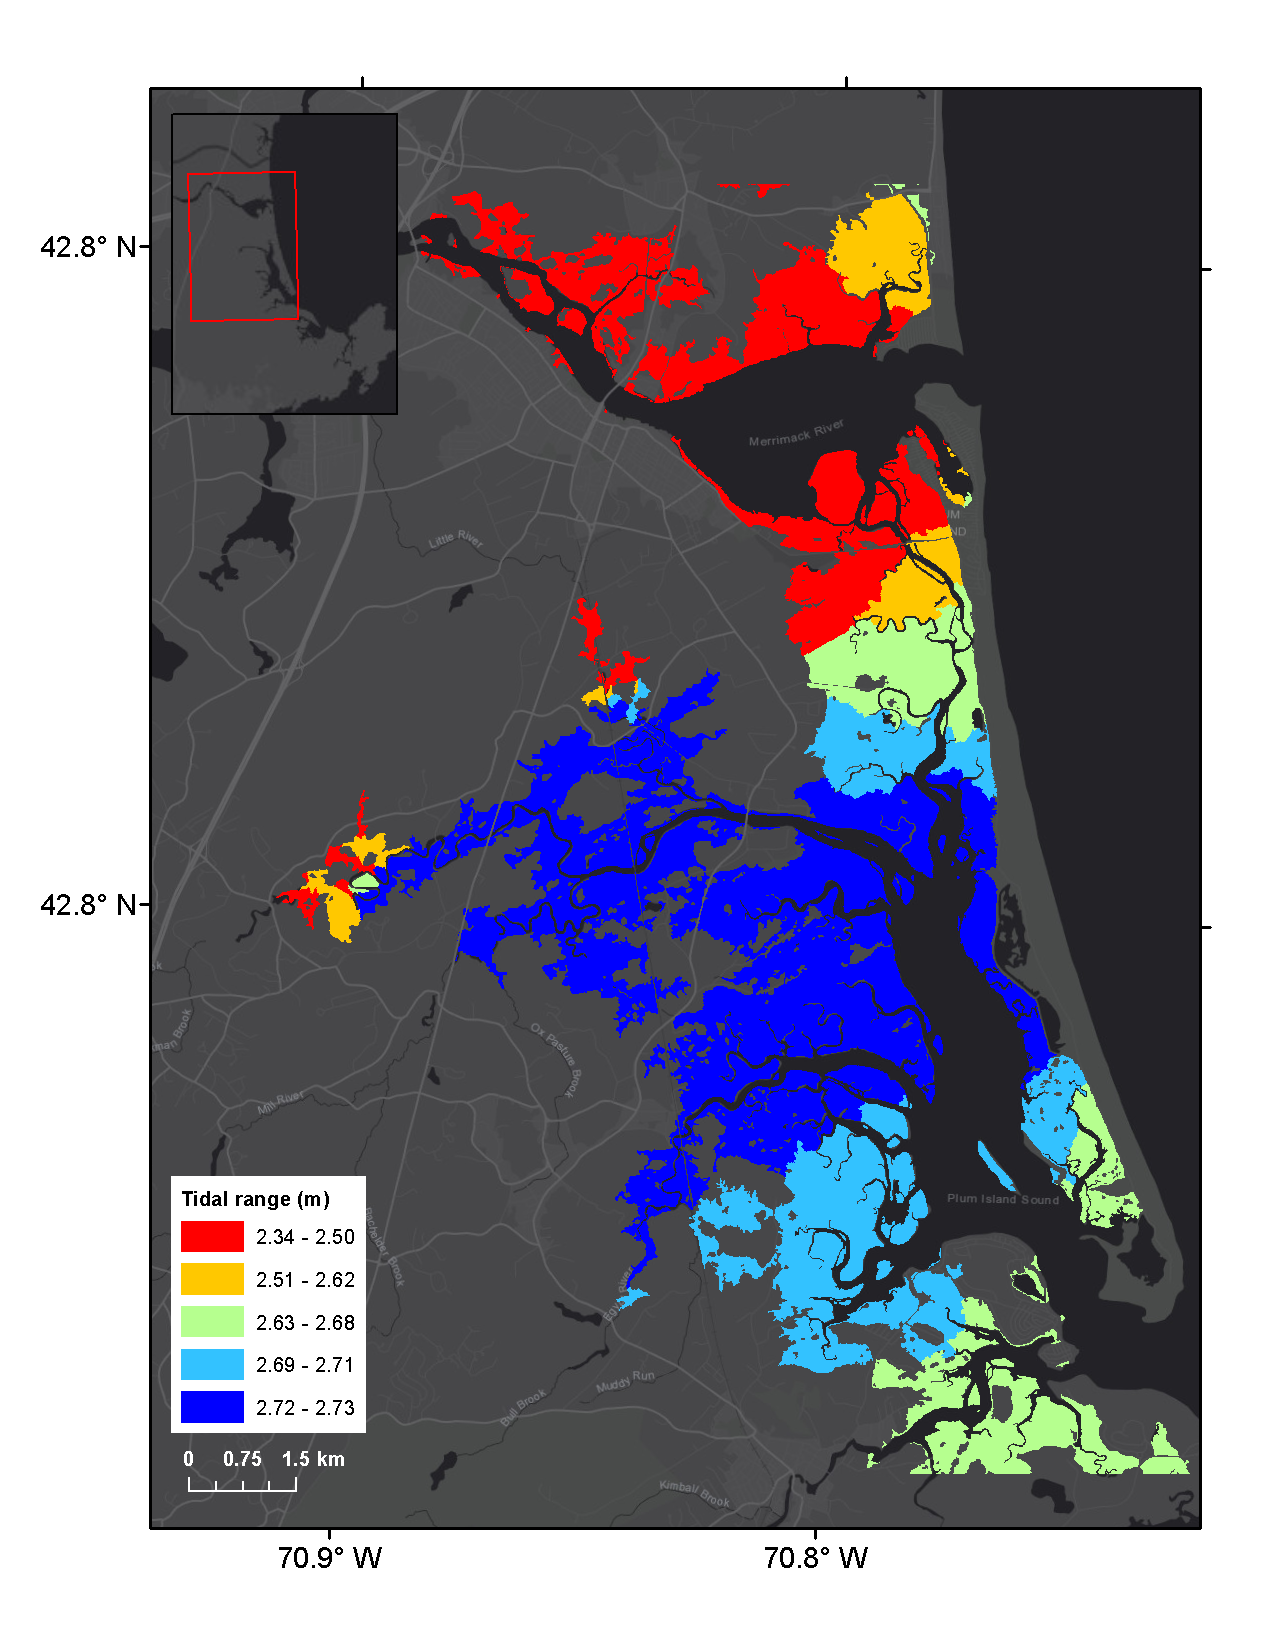 Graphic that shows mean tidal range in marsh units of PIEPR salt marsh complex.